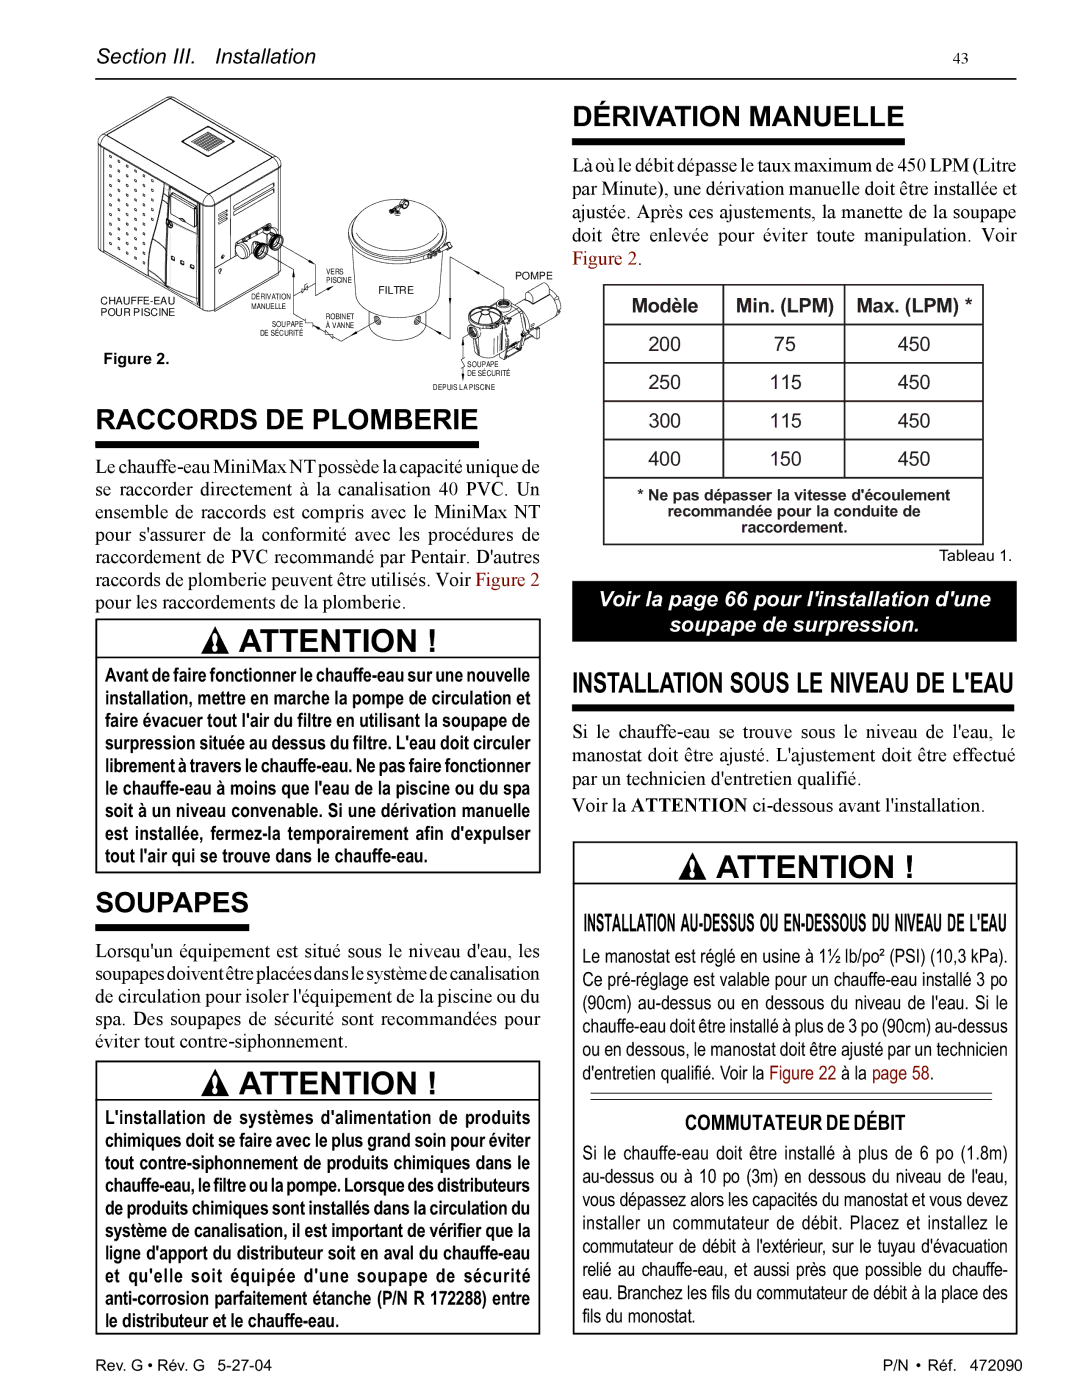 Pentair 200 installation manual Raccords DE Plomberie, Soupapes, Dérivation Manuelle 